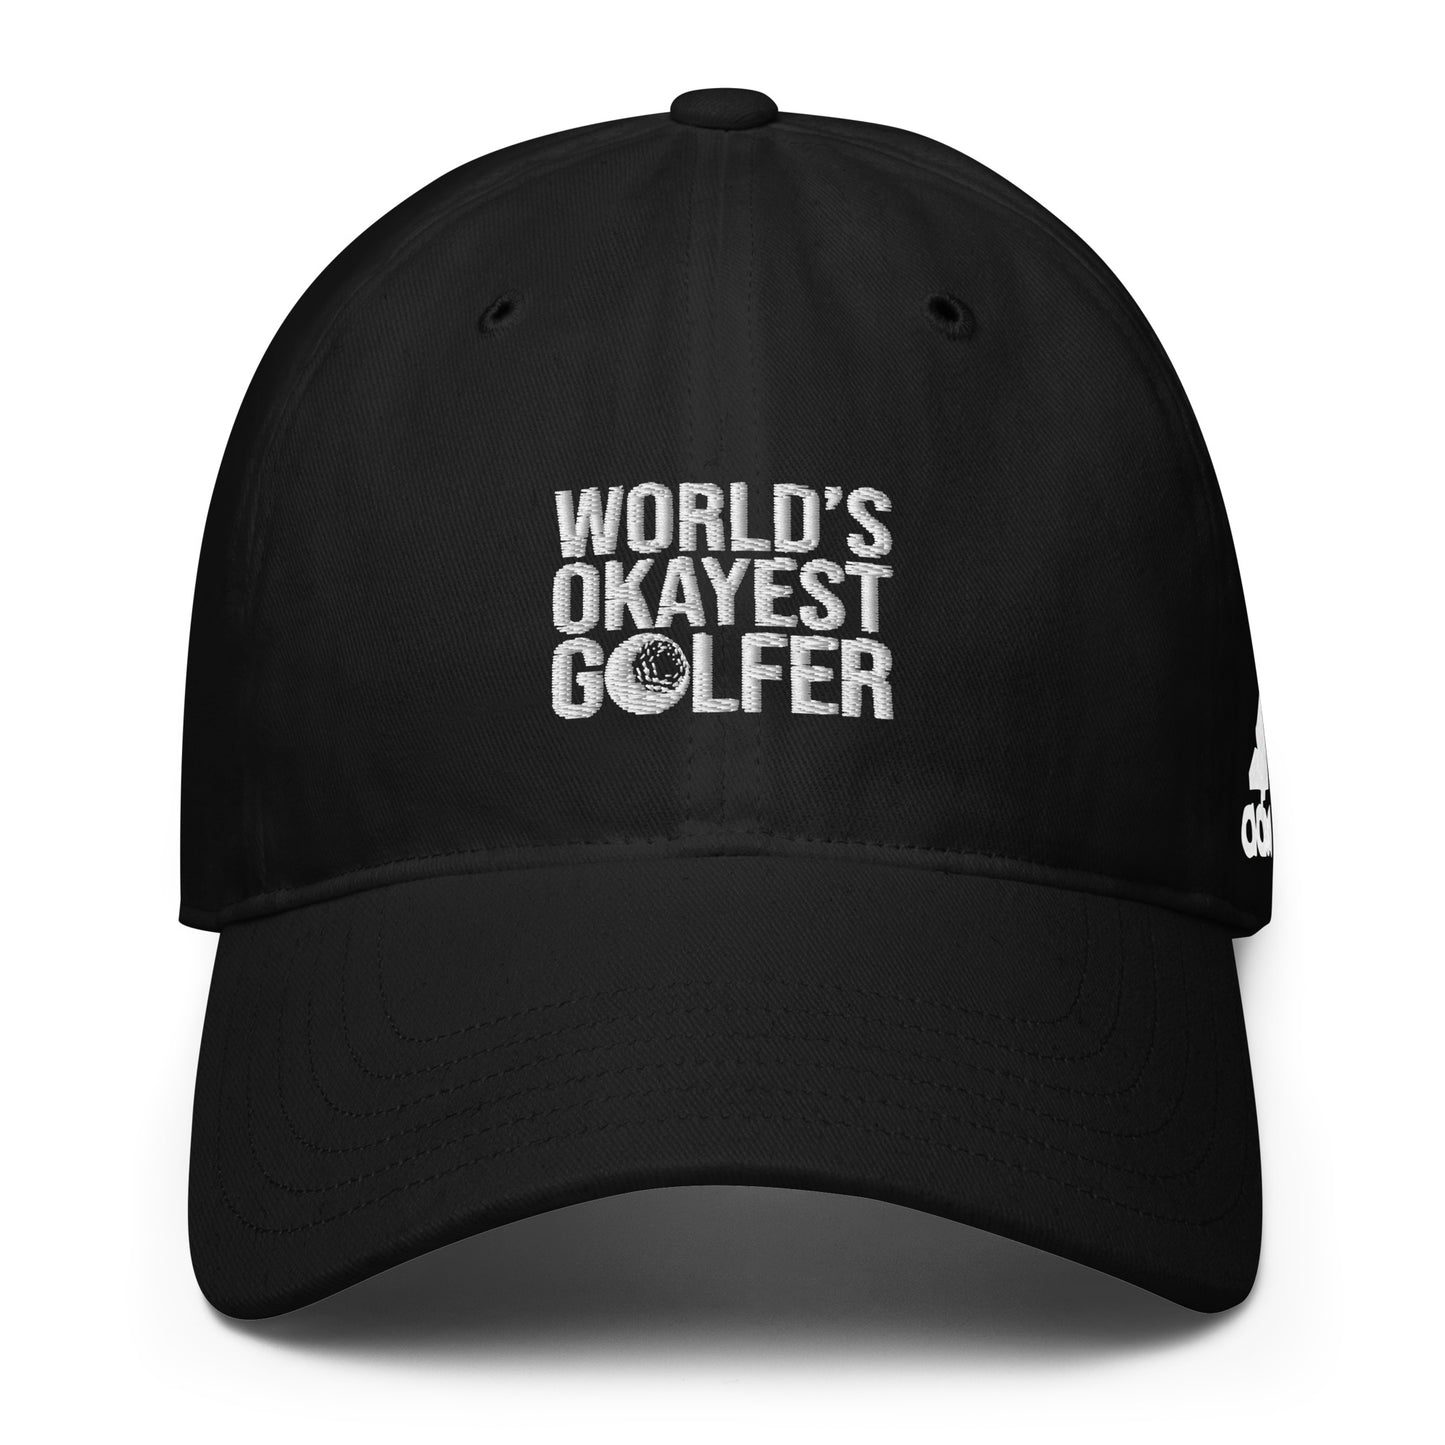 Adidas 'World's Okayest Golfer' Performance Golf Cap